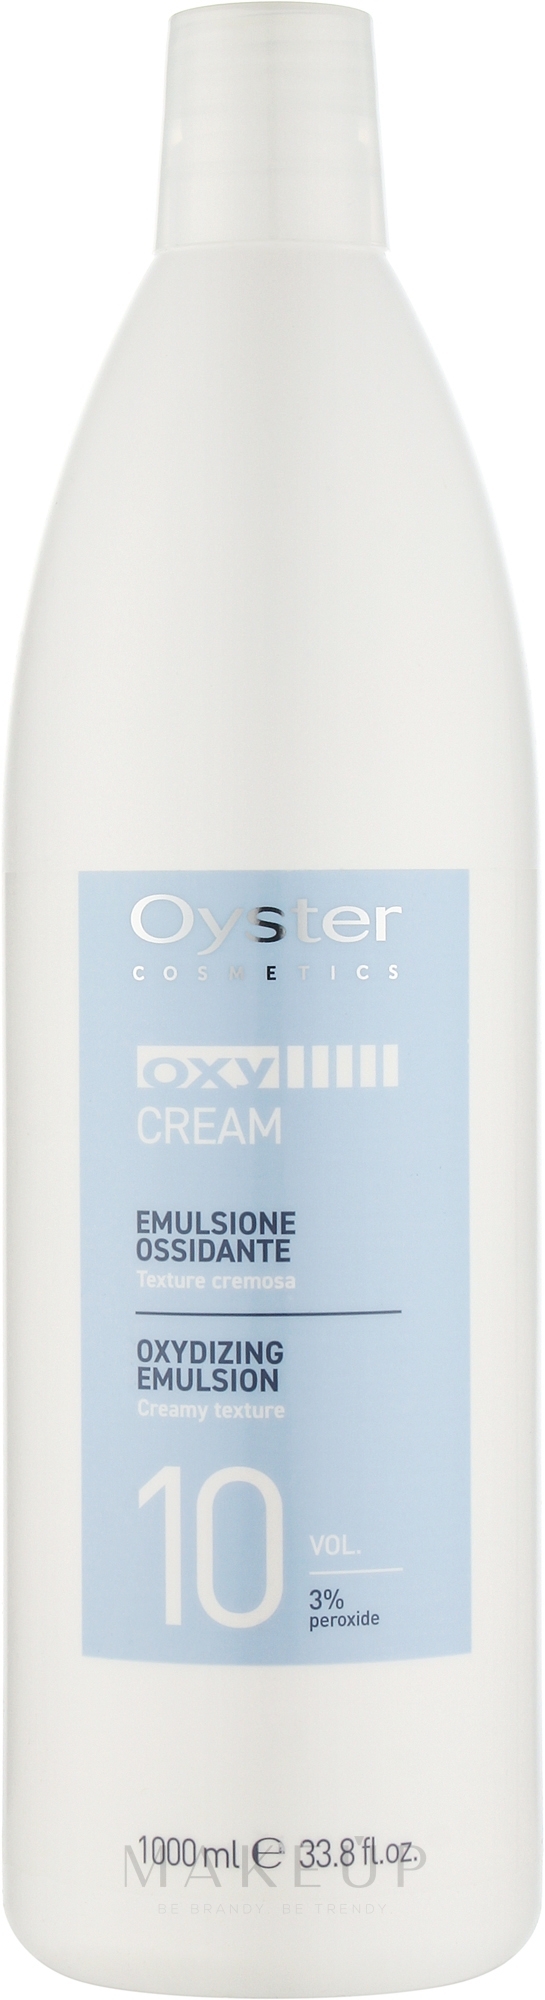 Oxidationsmittel 10 Vol 3% - Oyster Cosmetics Oxy Cream Oxydant — Bild 1000 ml